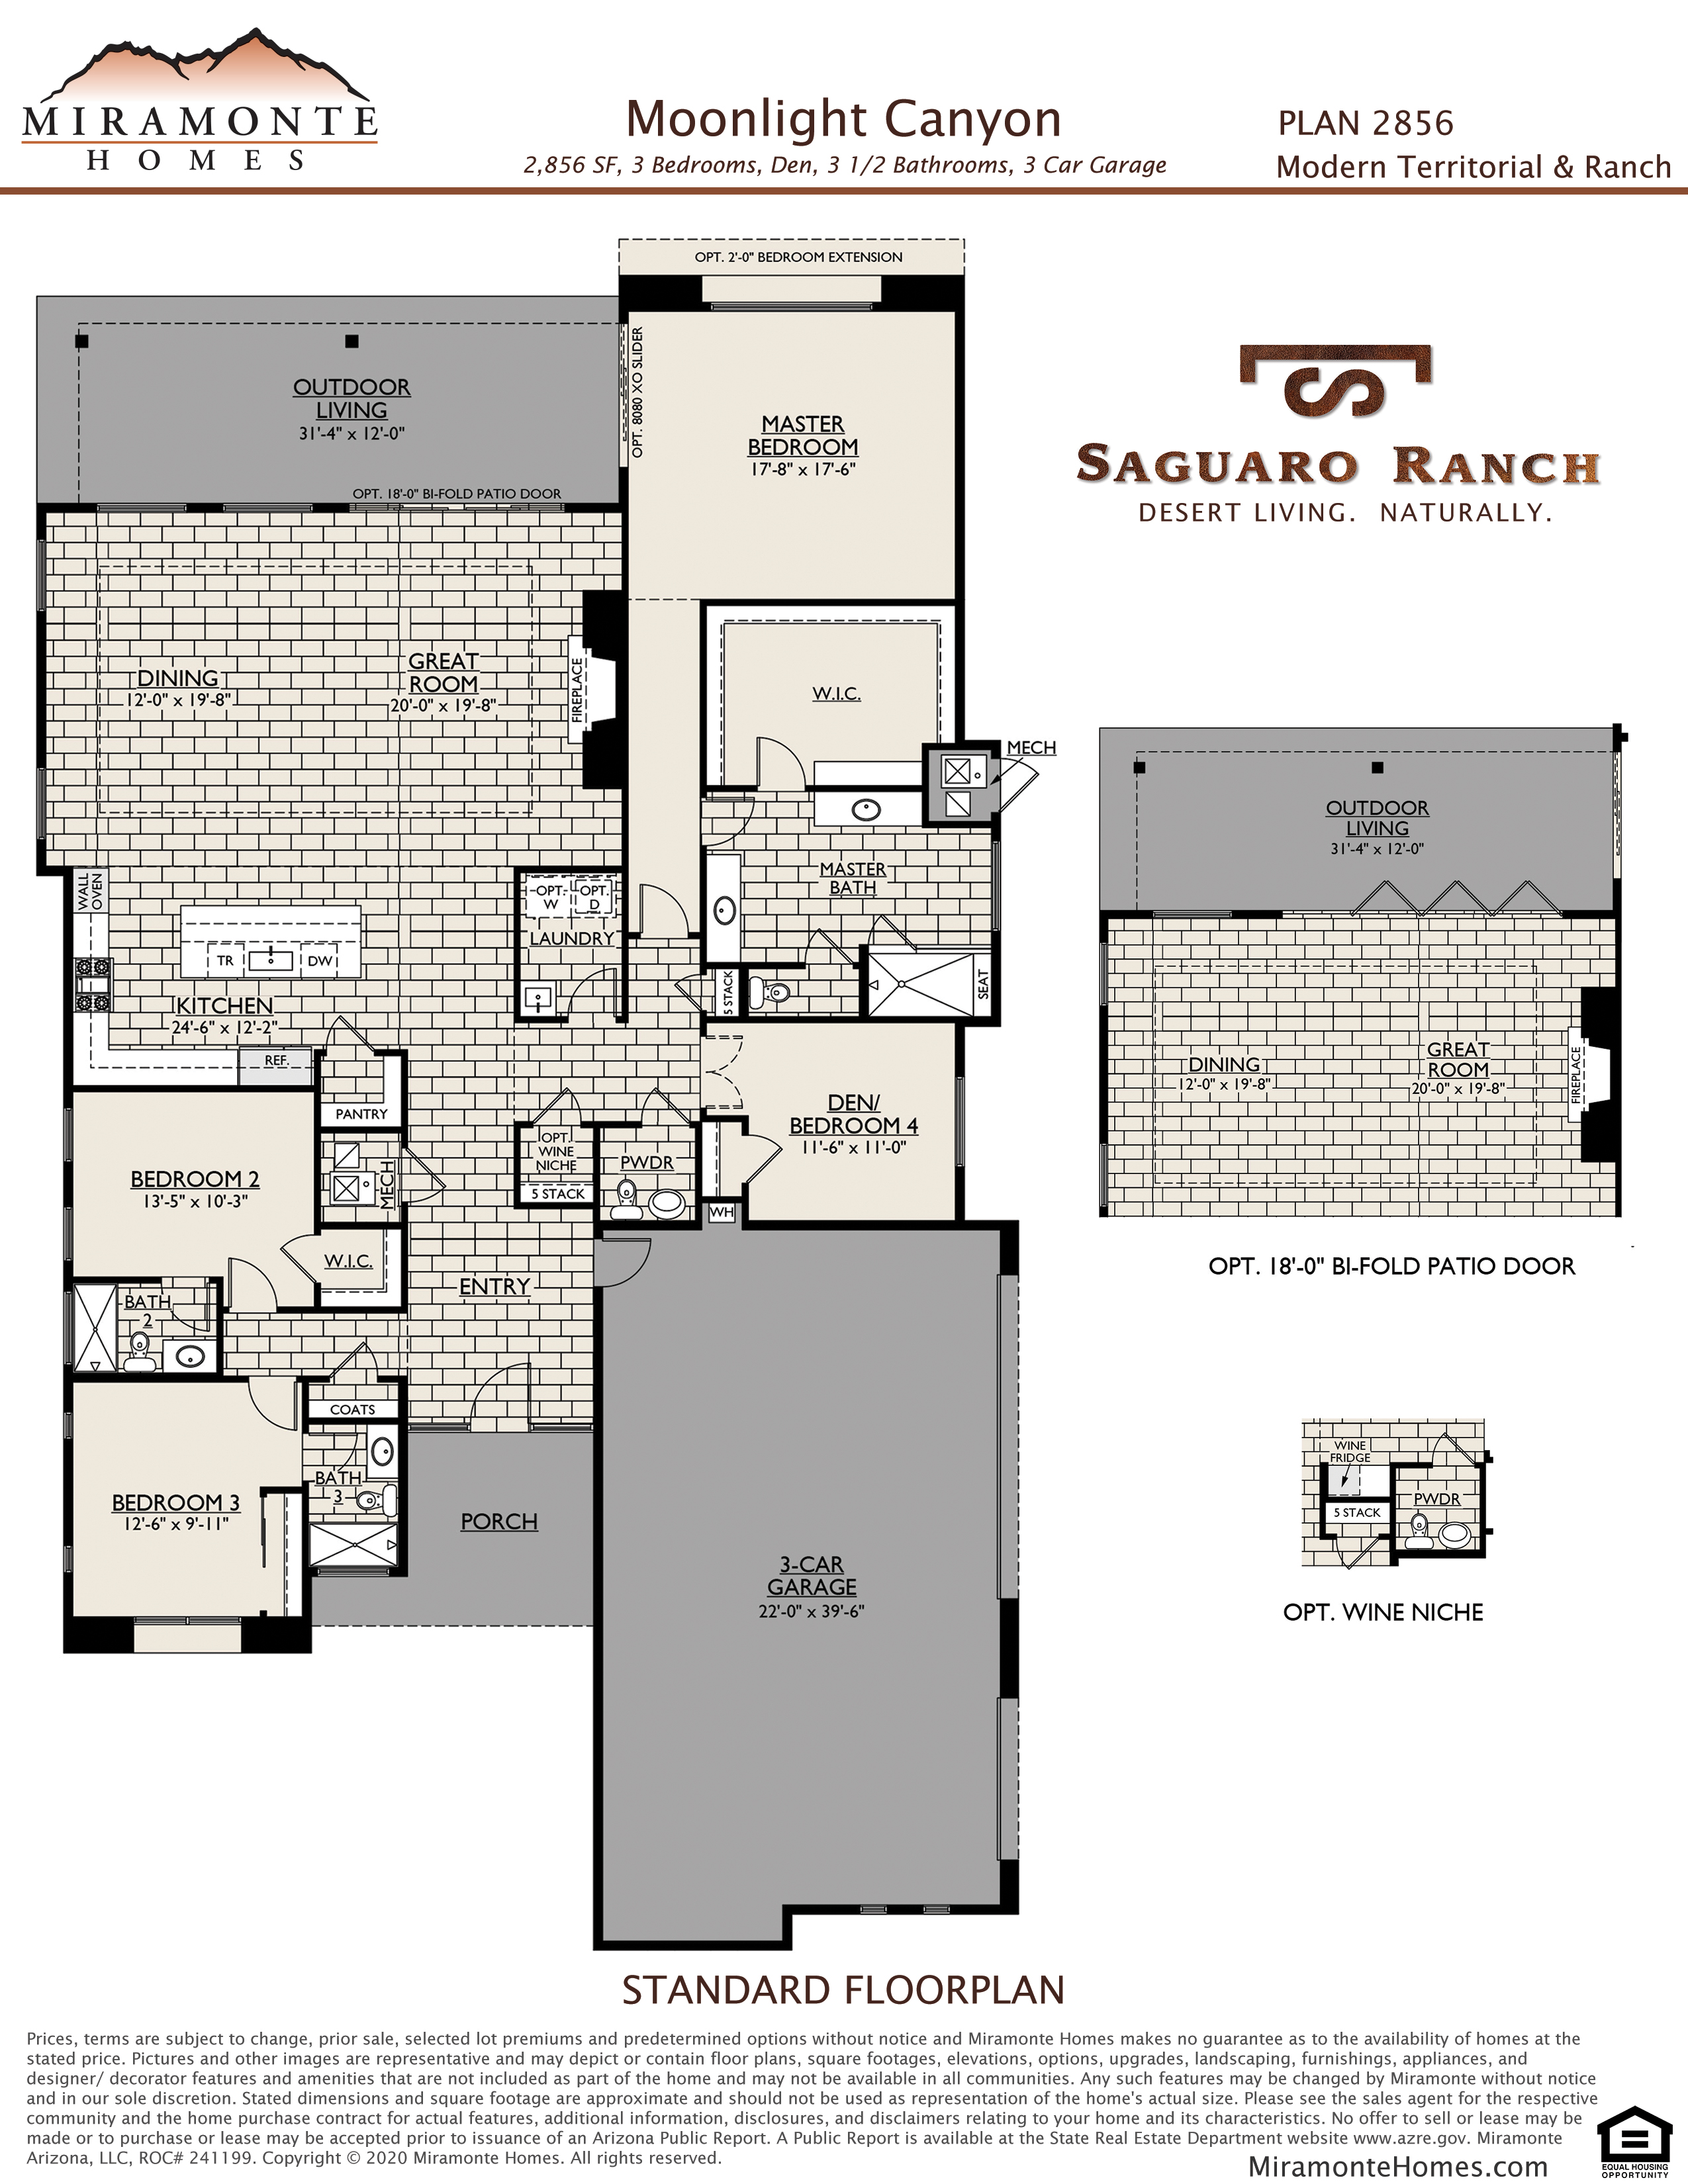 2856 Floorplan - Modern Territorial and Ranch Standard Floorplan.jpg 1664495194383